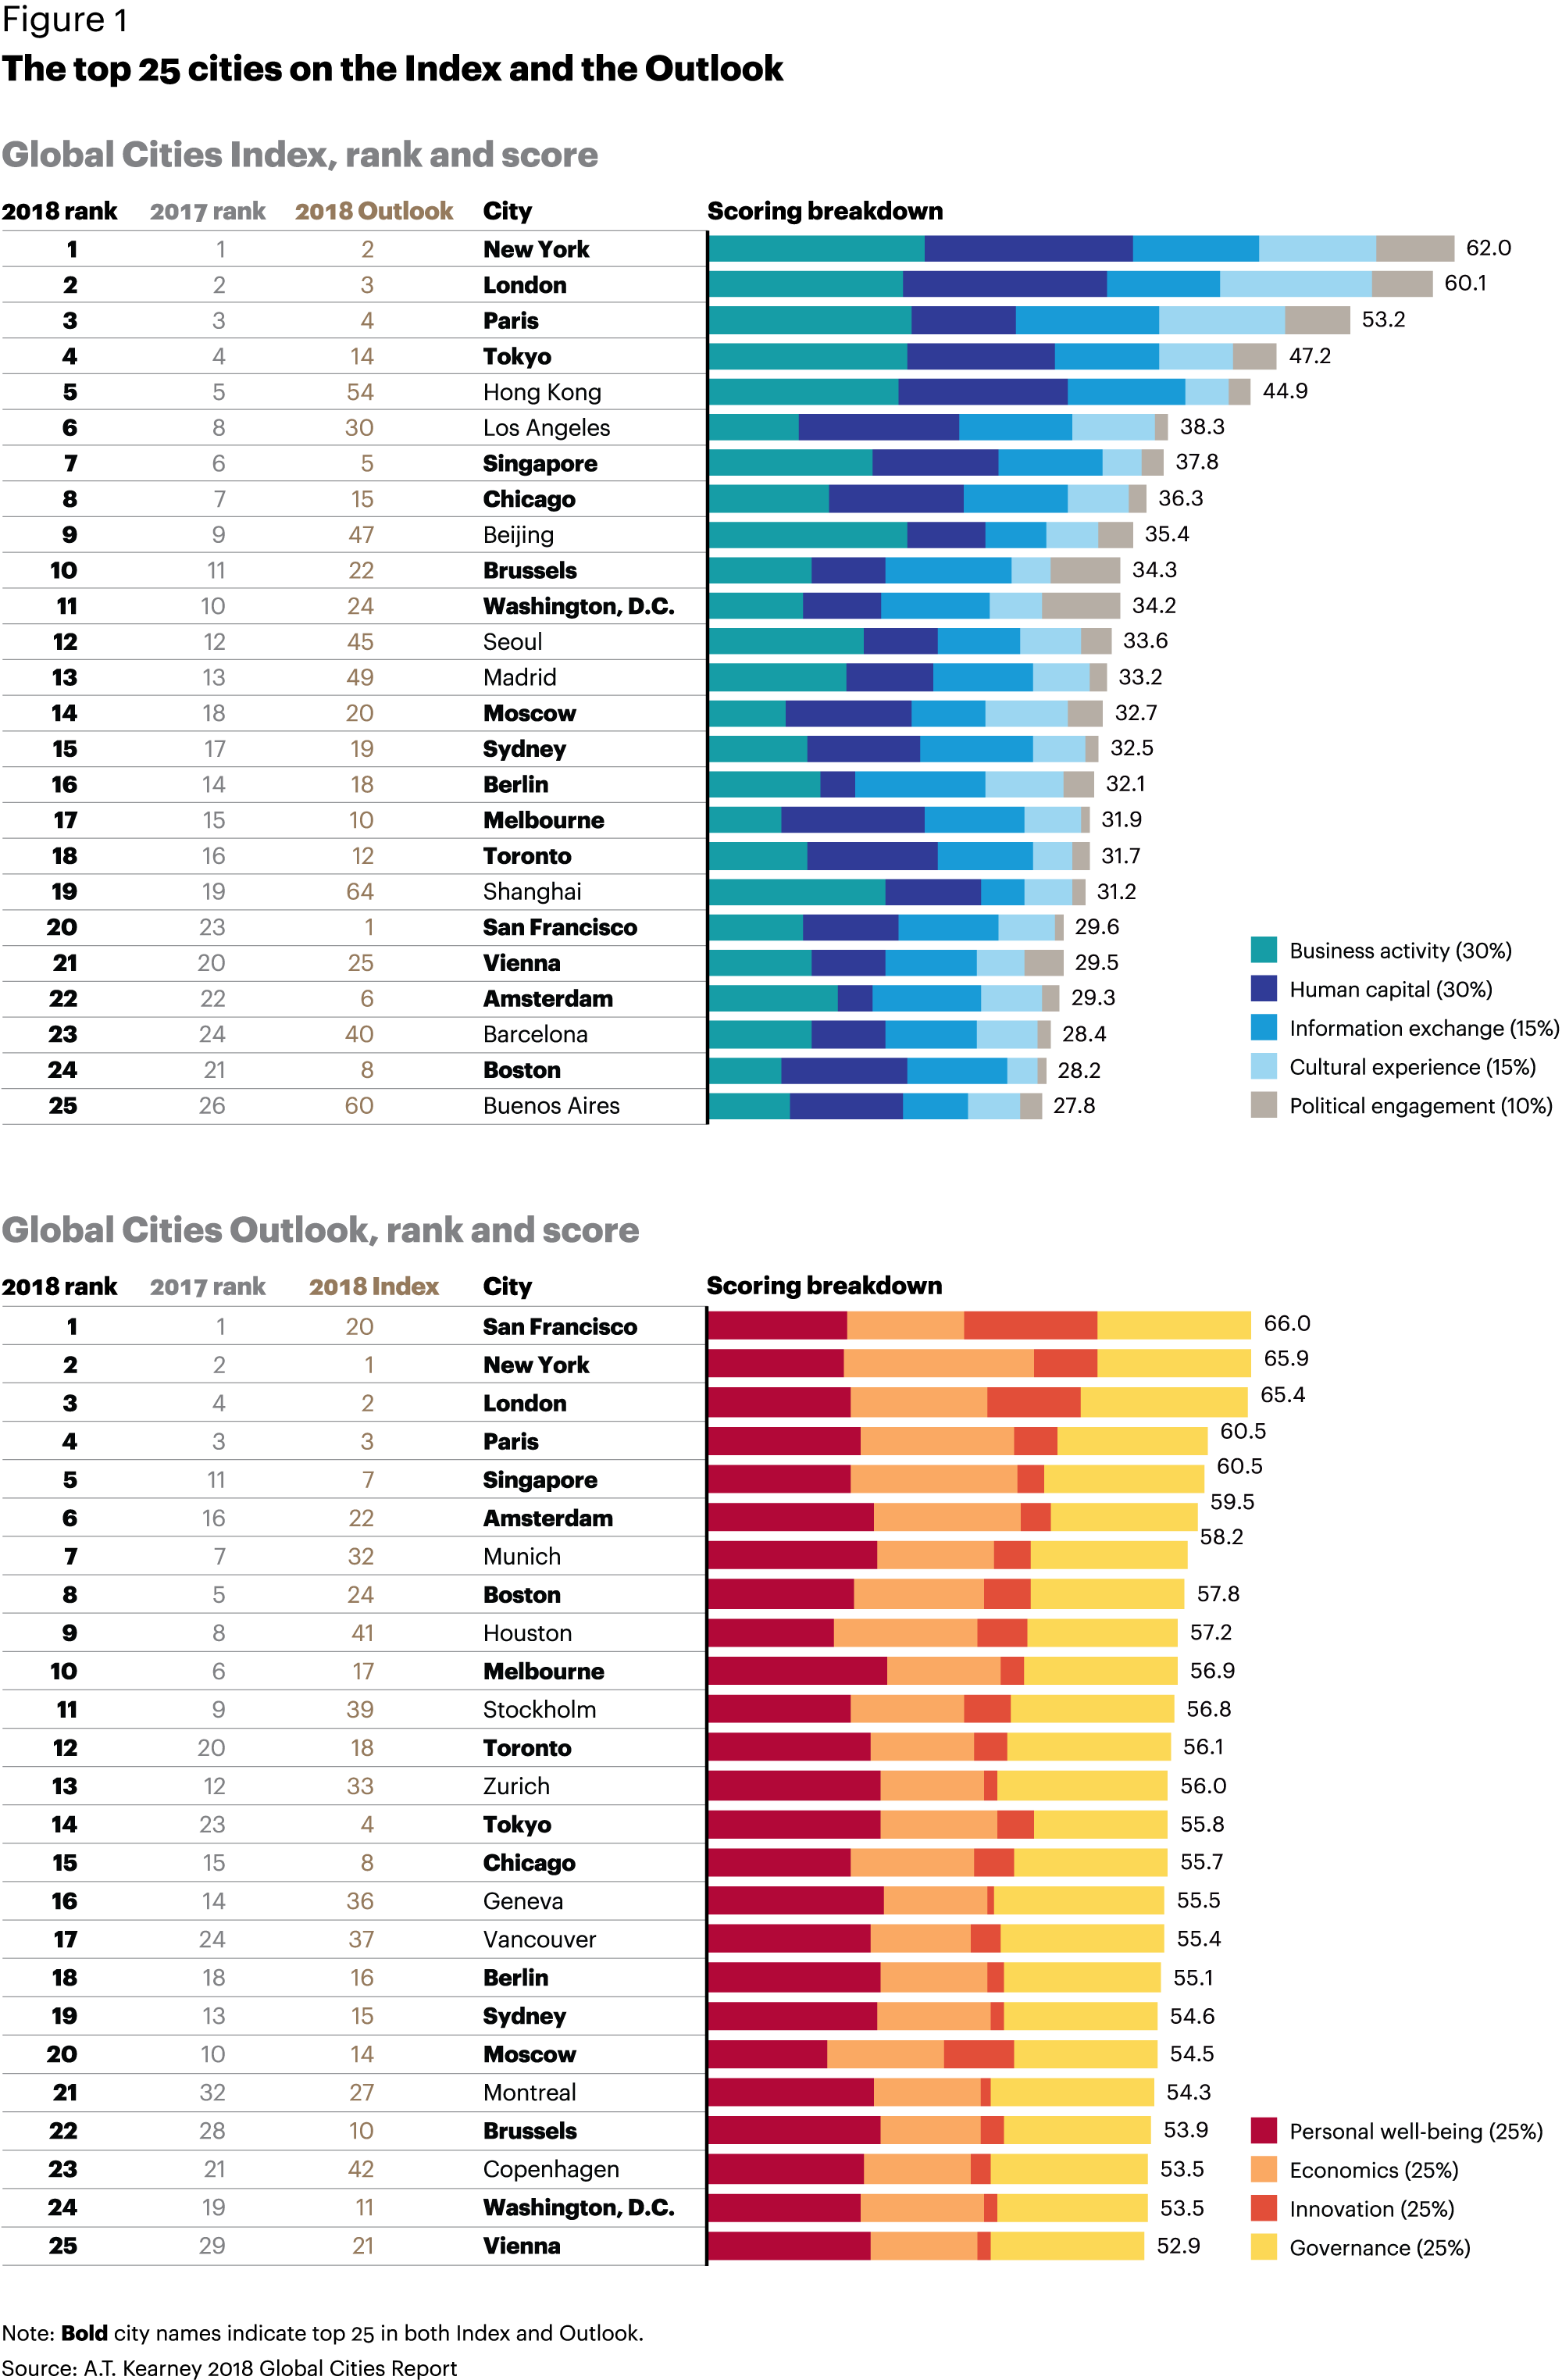 global cities ranking atkaerney